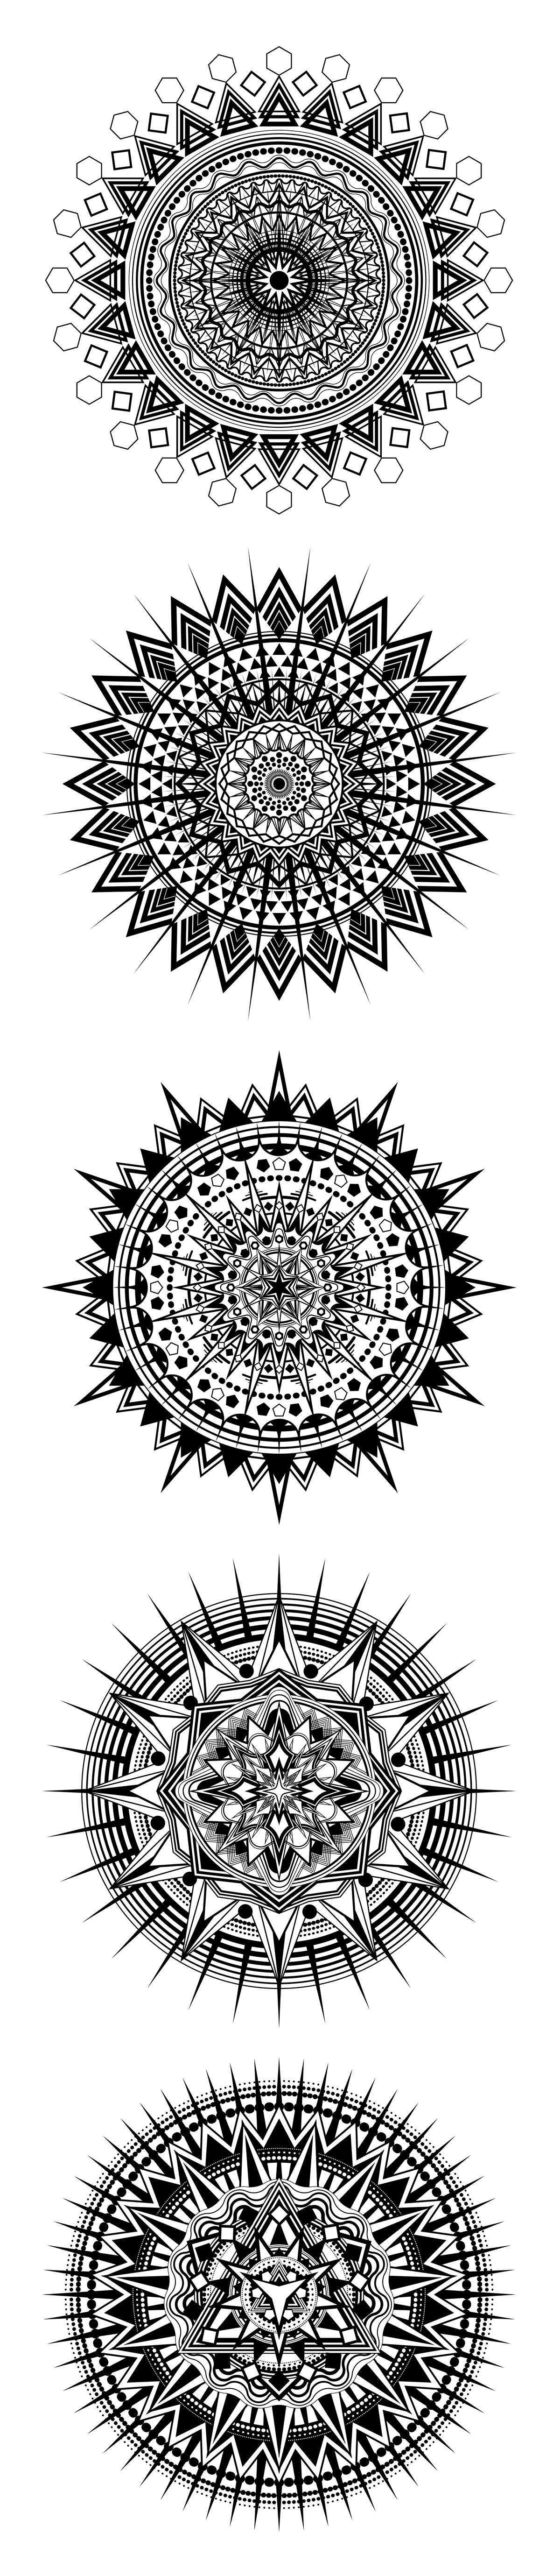 Mandala graphic design circular concentration geometric abstract artwork Colourful  series